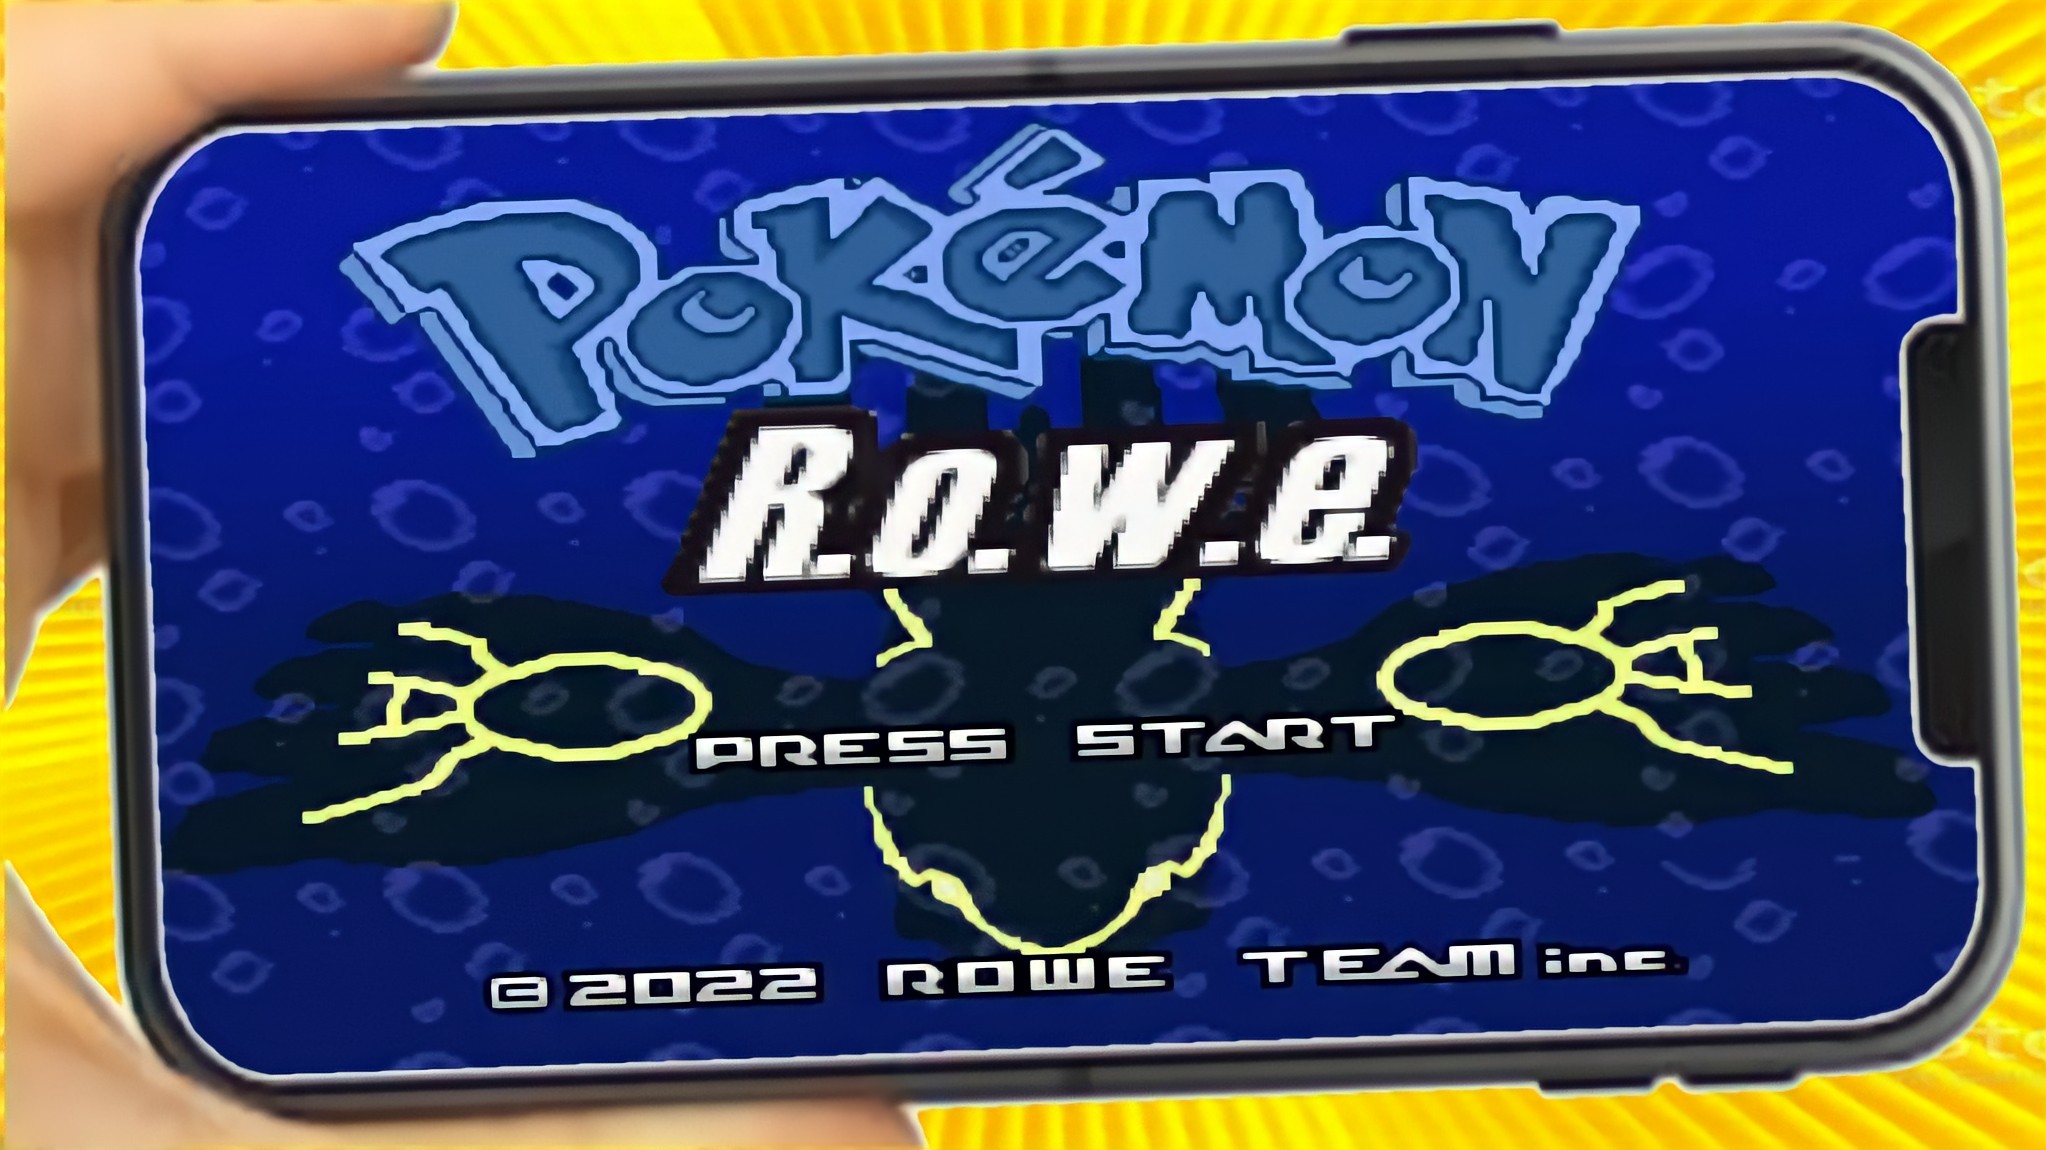 ◓ Pokémon ROM Open World Emerald (R.O.W.E) 💾 [v1.8.3] • FanProject